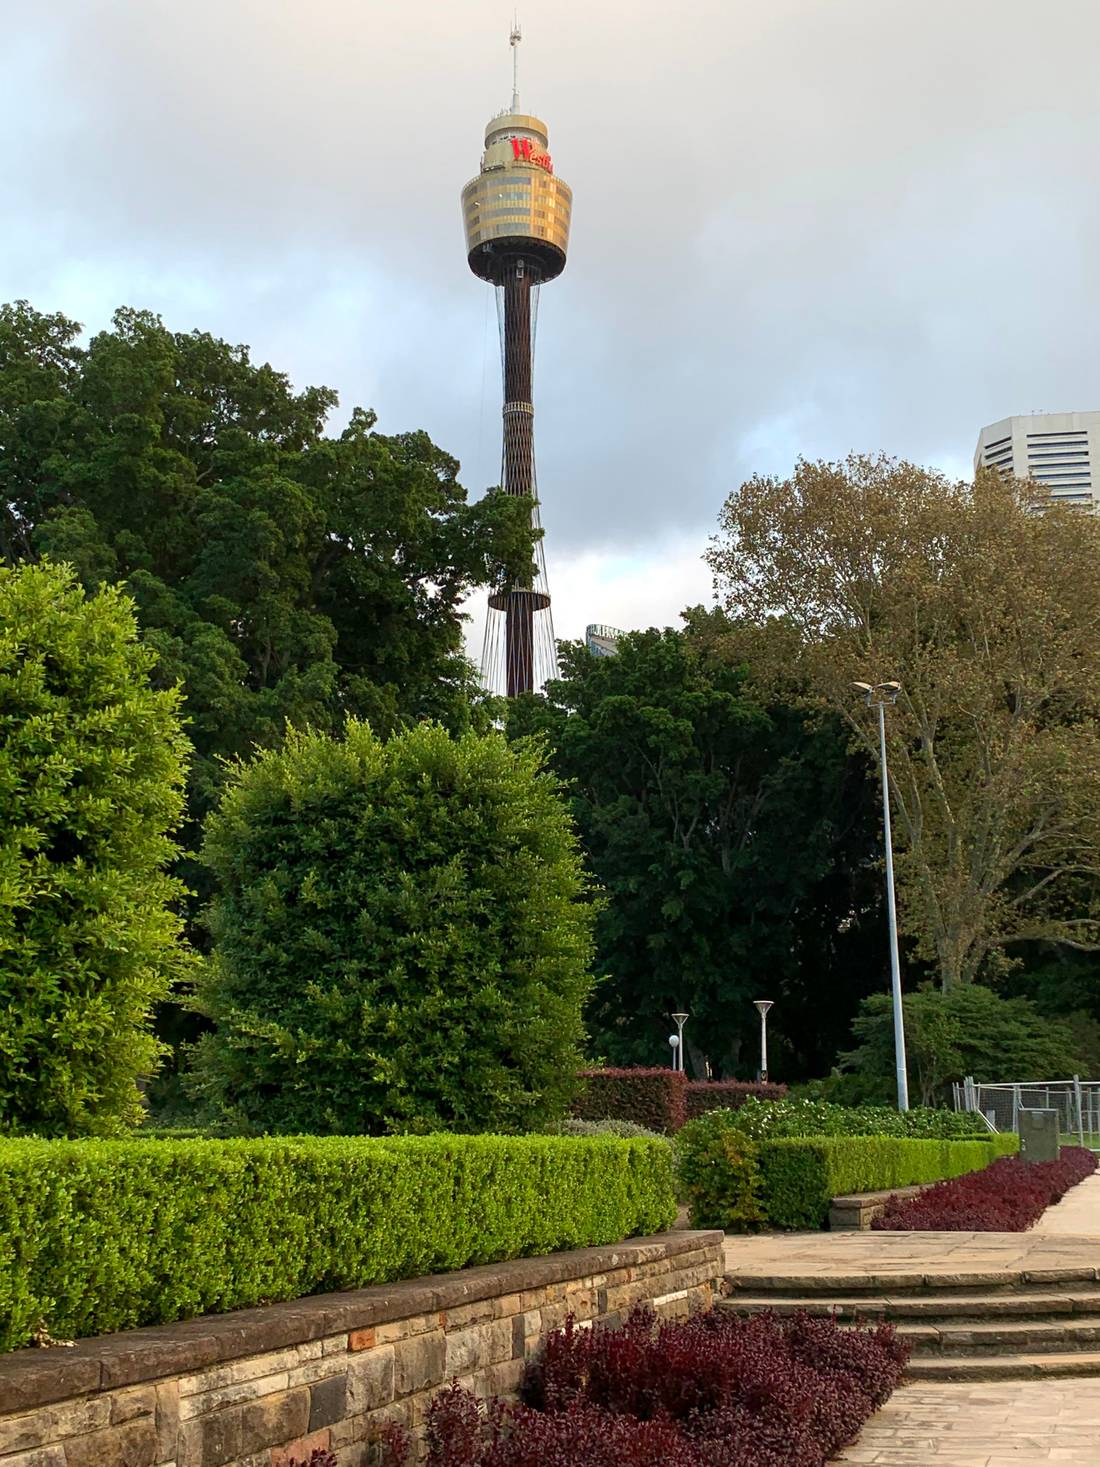 La Torre de Sydney / Sydney Tower Eye / Wieża widokowa w Sydney